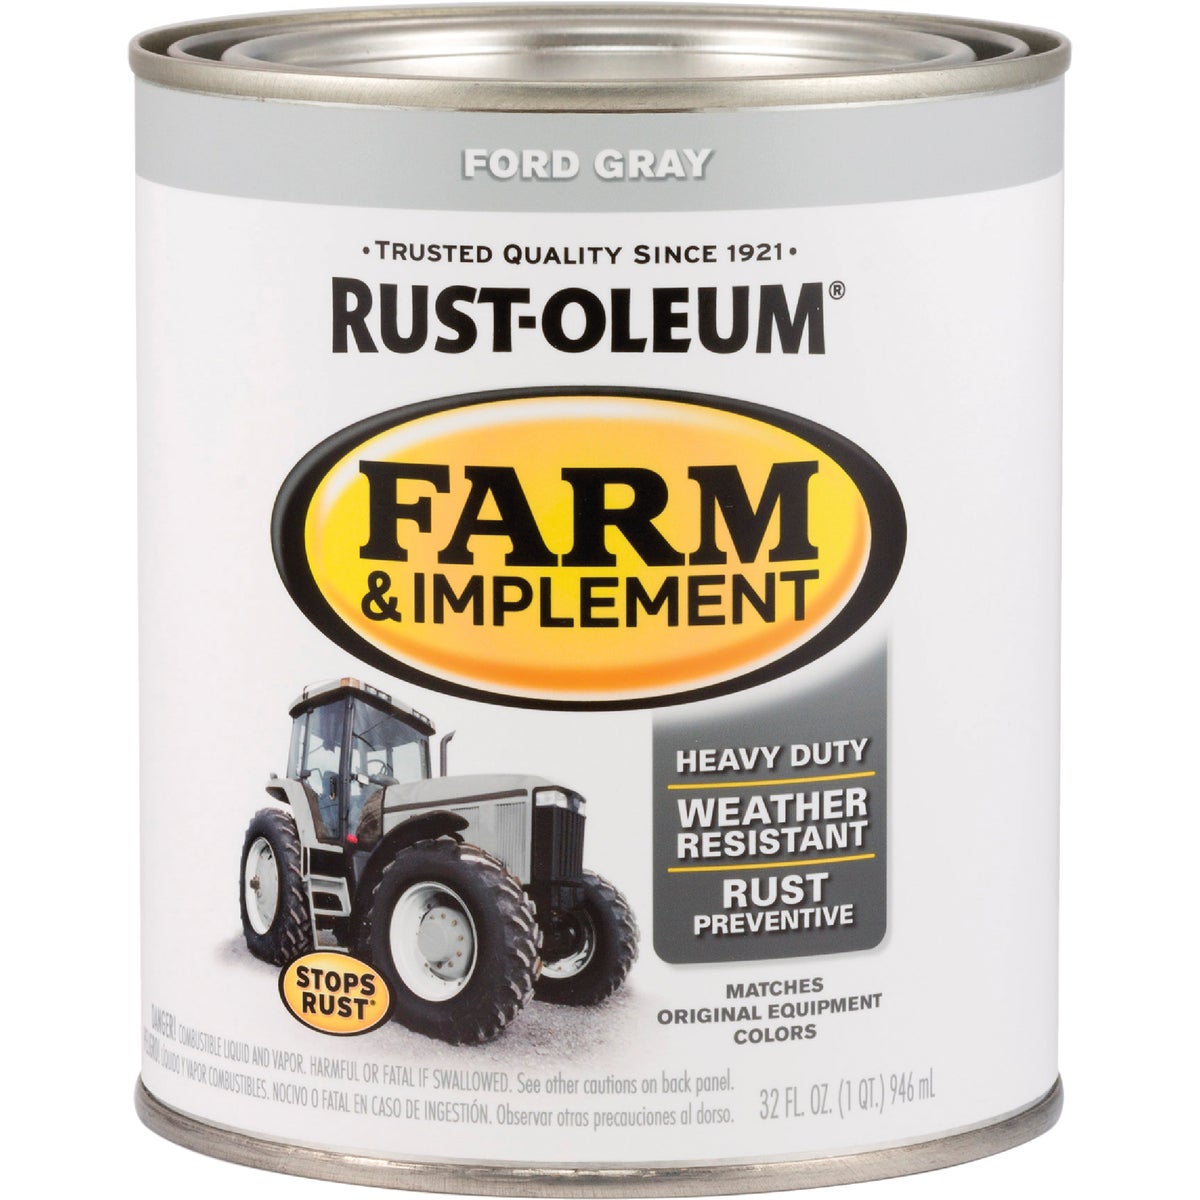 Rust-Oleum 1 Quart Ford Gray Gloss Farm & Implement Enamel